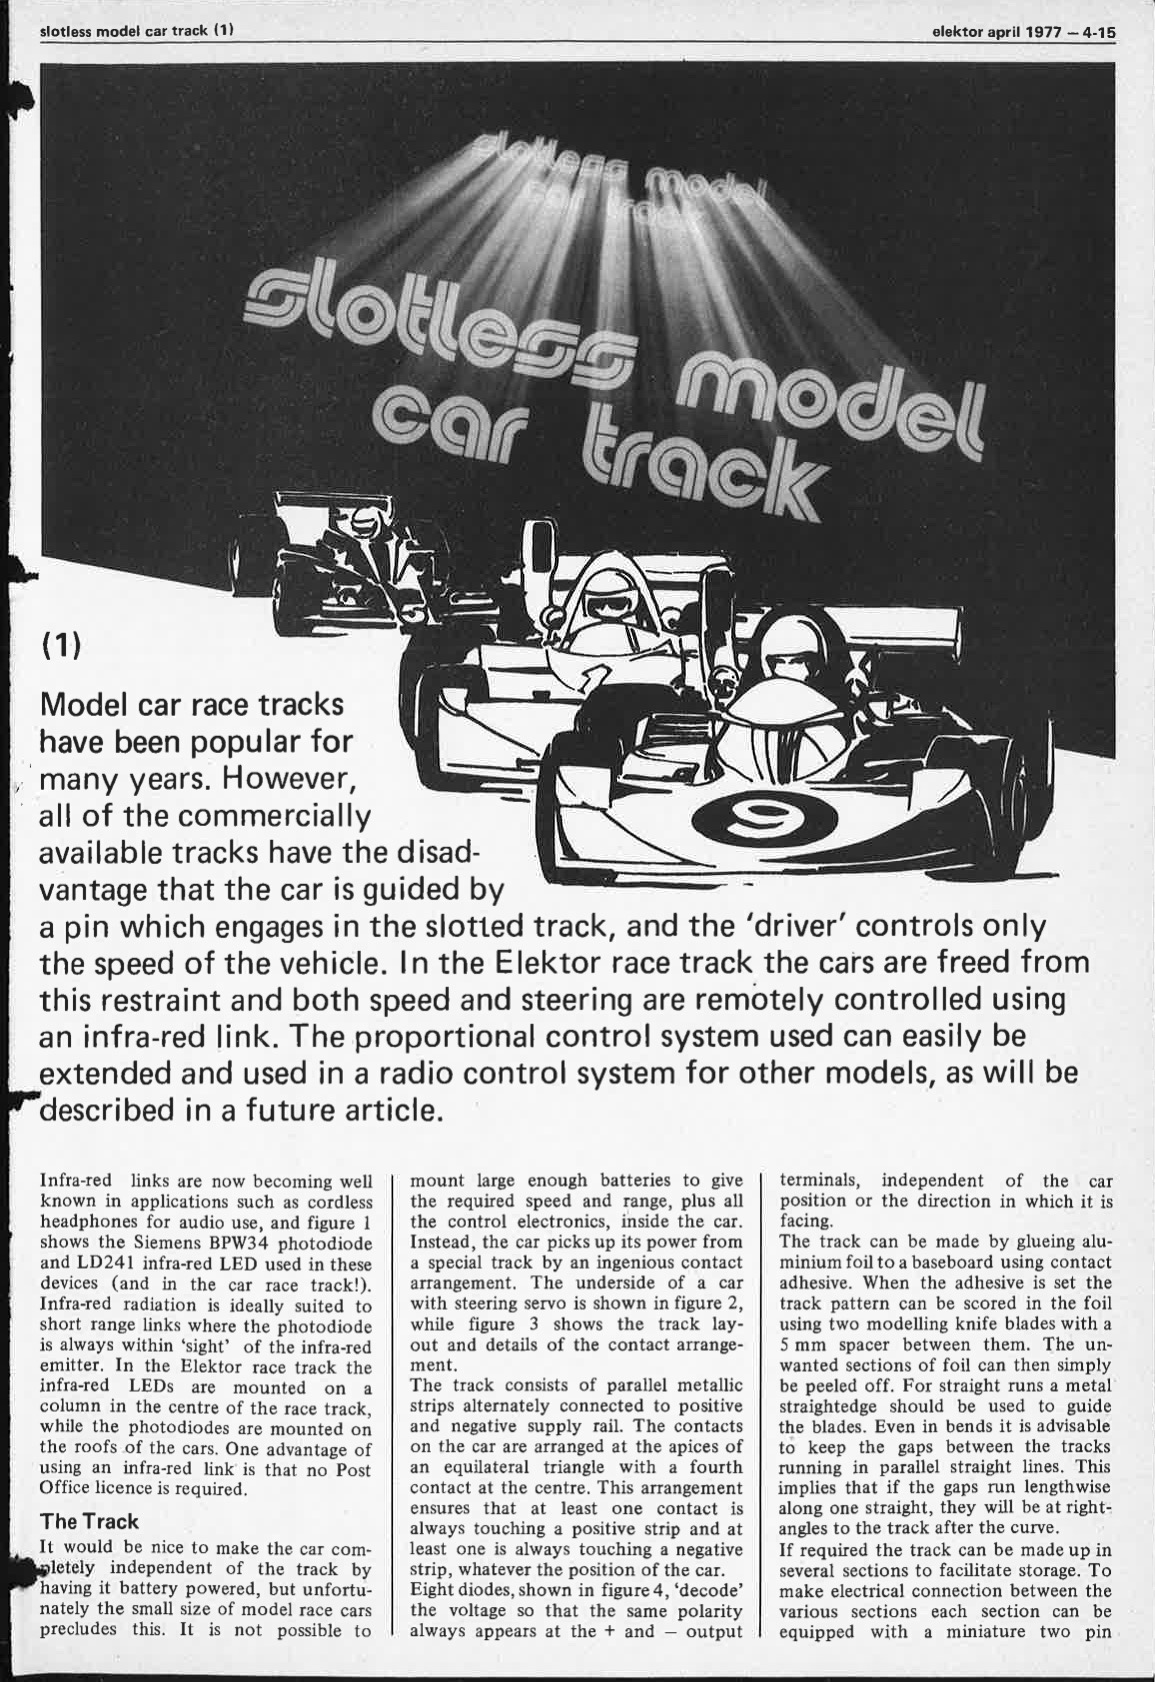 slotless model car track (1)